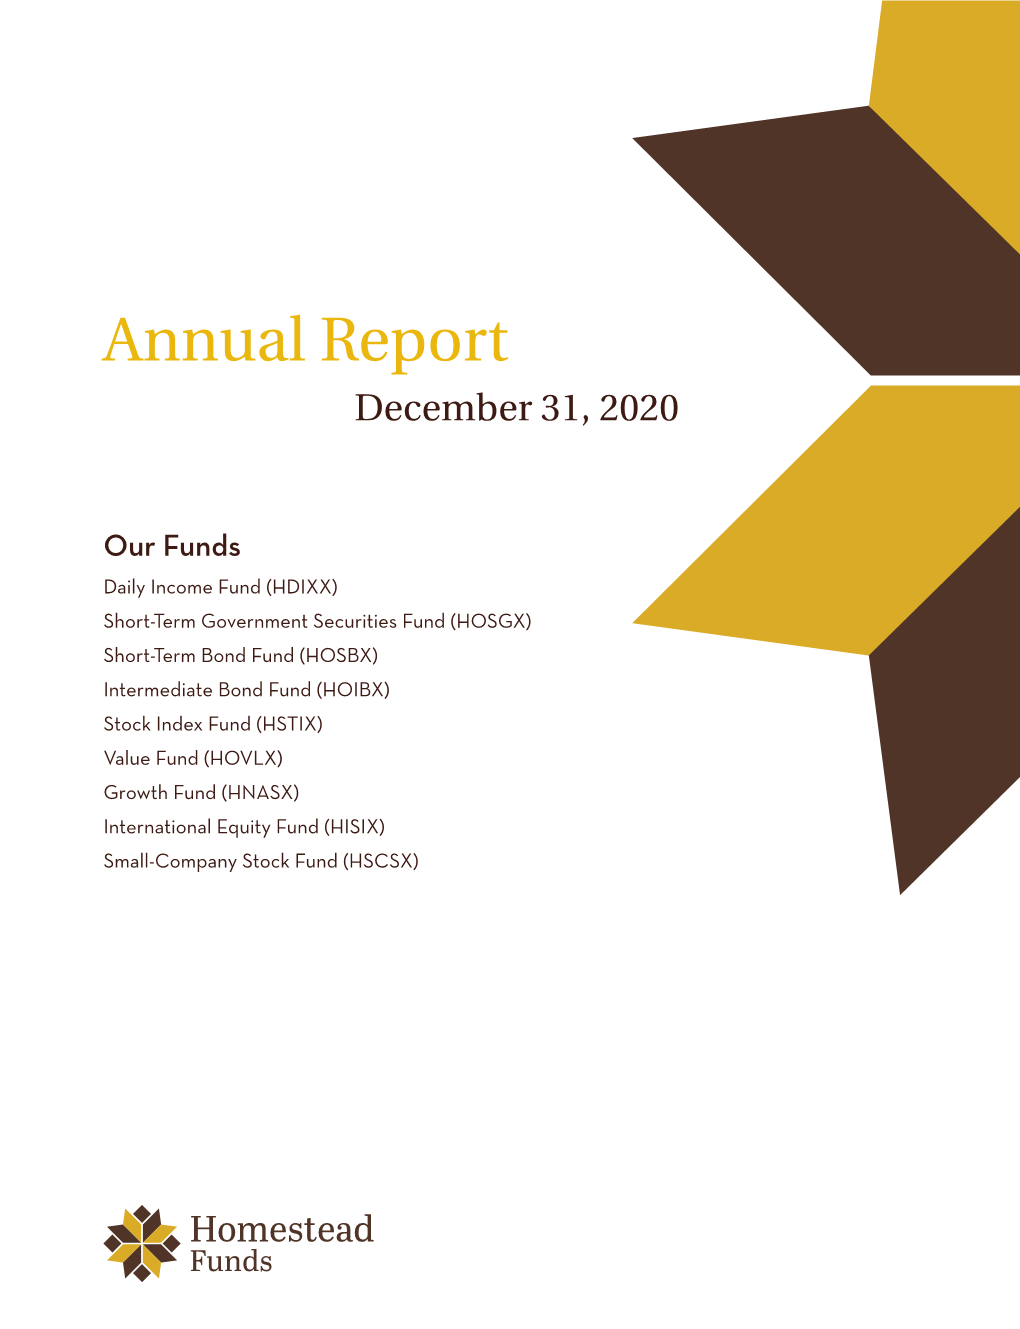 Annual Report December 31, 2020